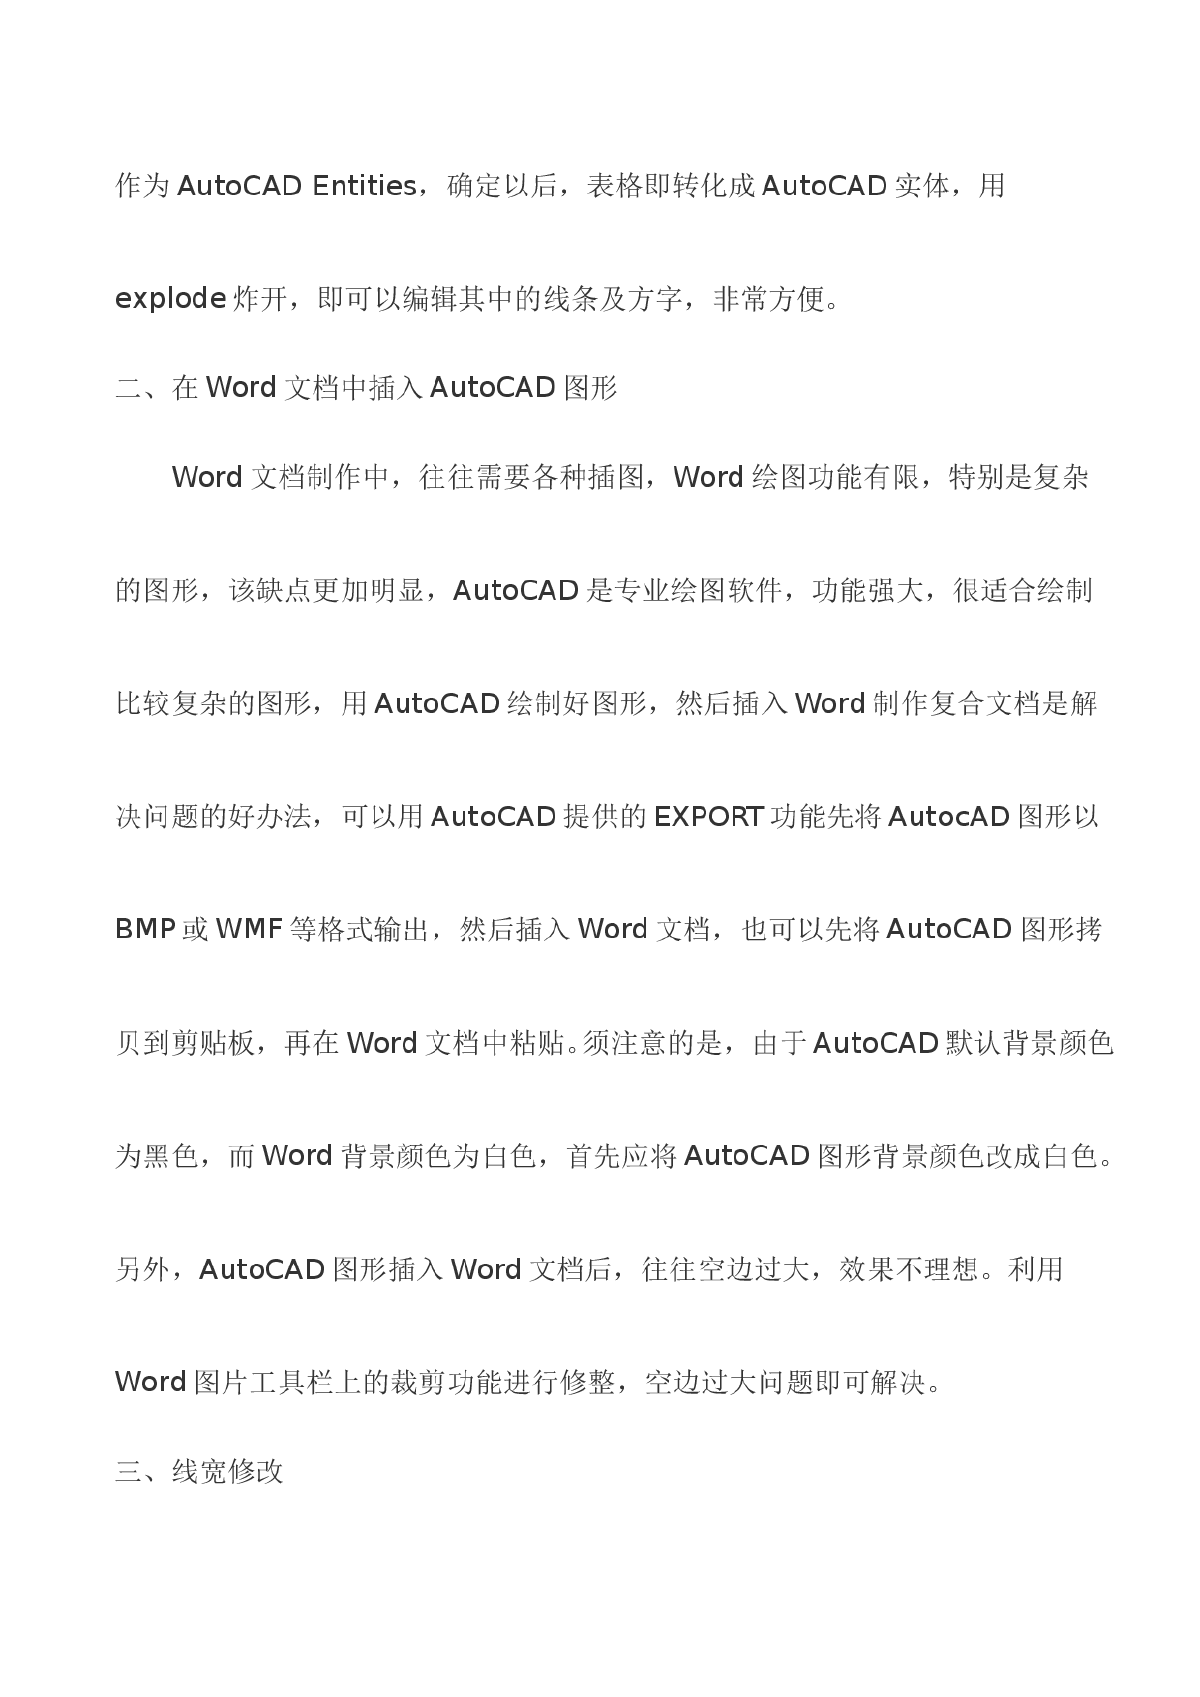 AutoCAD应用秘籍大全-图二